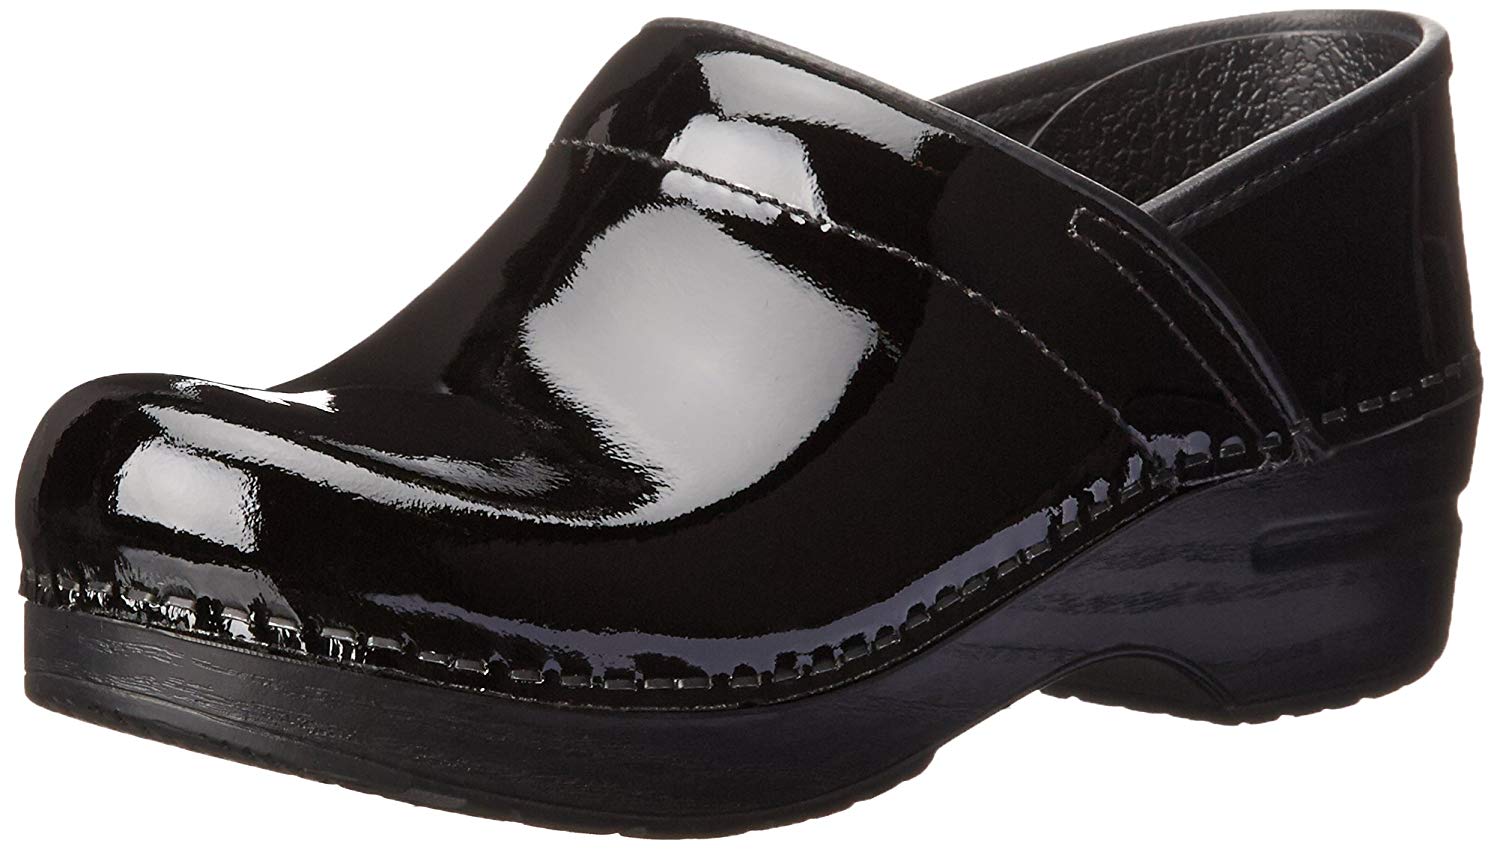 Dansko Womens Dansko Leather Closed Toe Clogs, Black Patent, Size 8.0